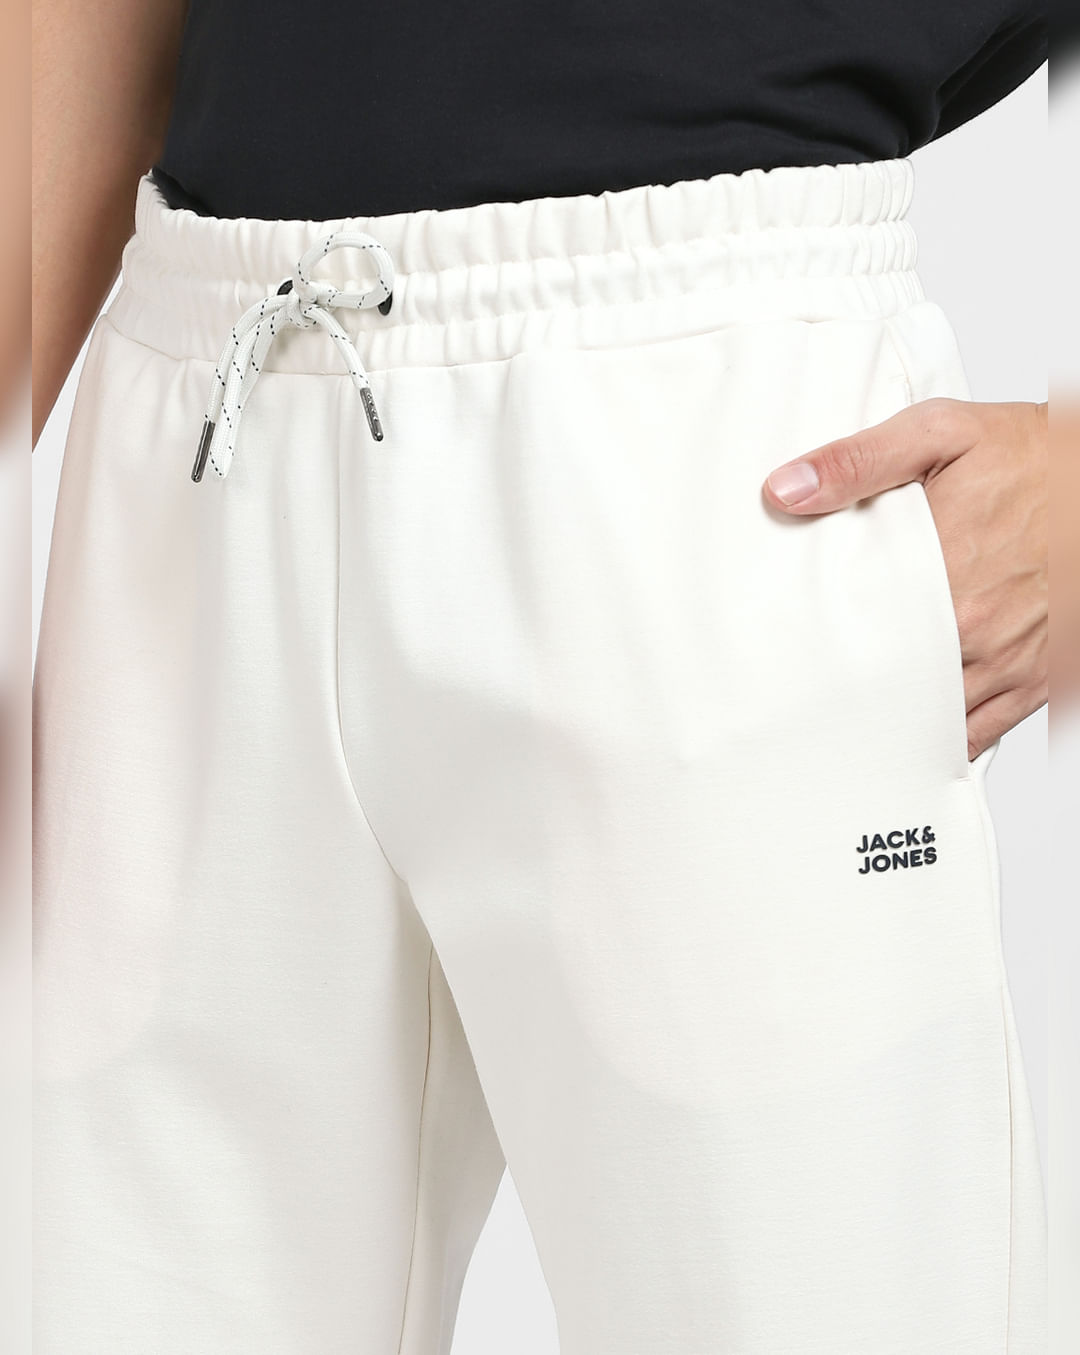 Jack & Jones Core set sweatpants with contrast stitch in gray